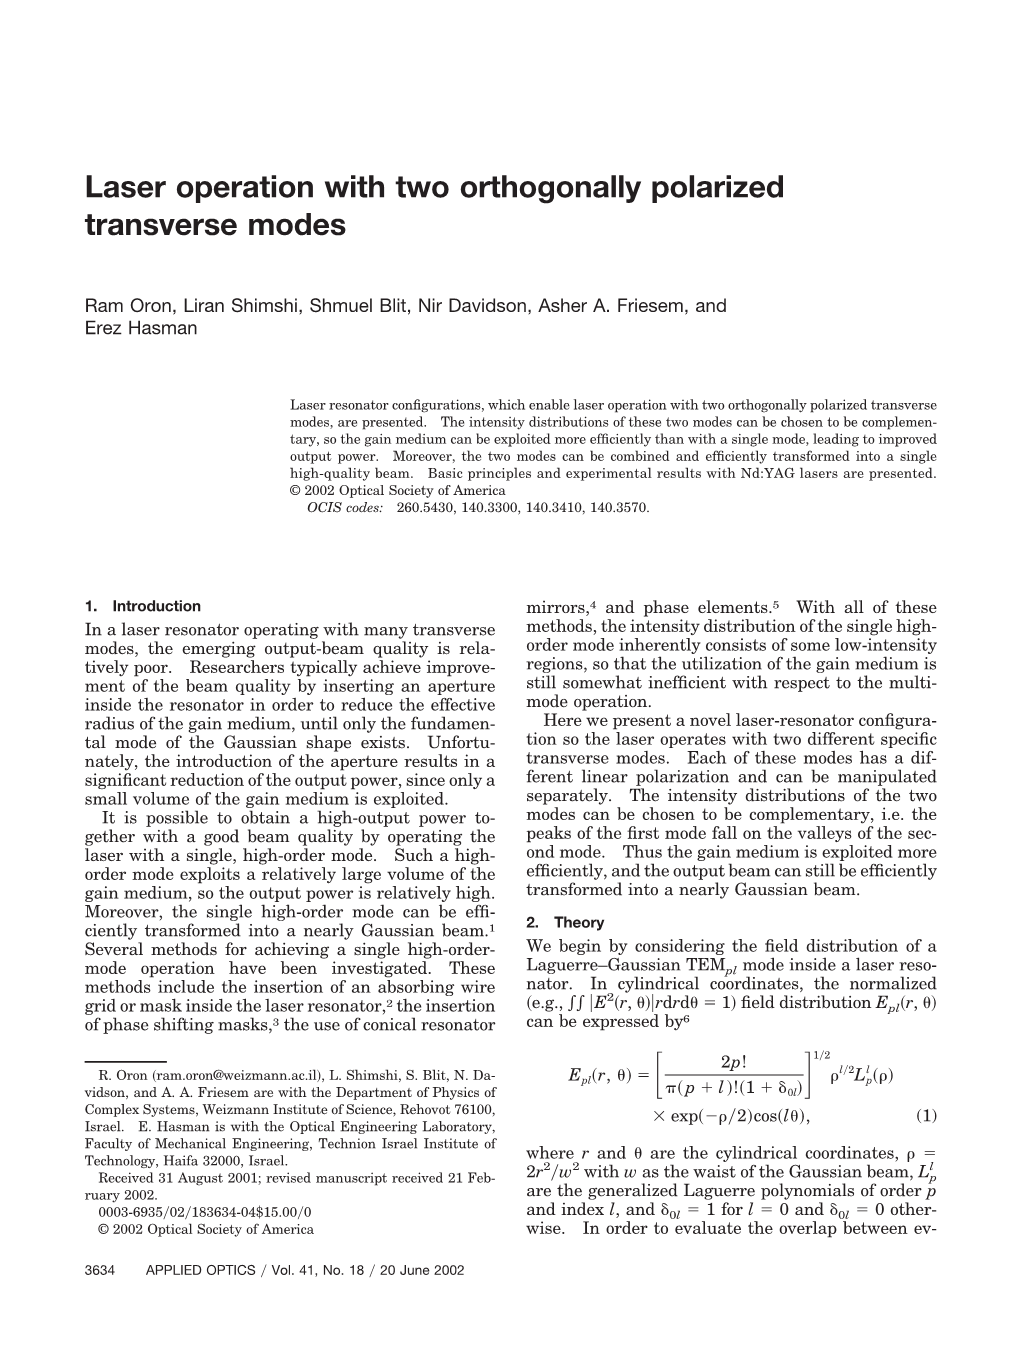 Laser Operation with Two Orthogonally Polarized Transverse Modes